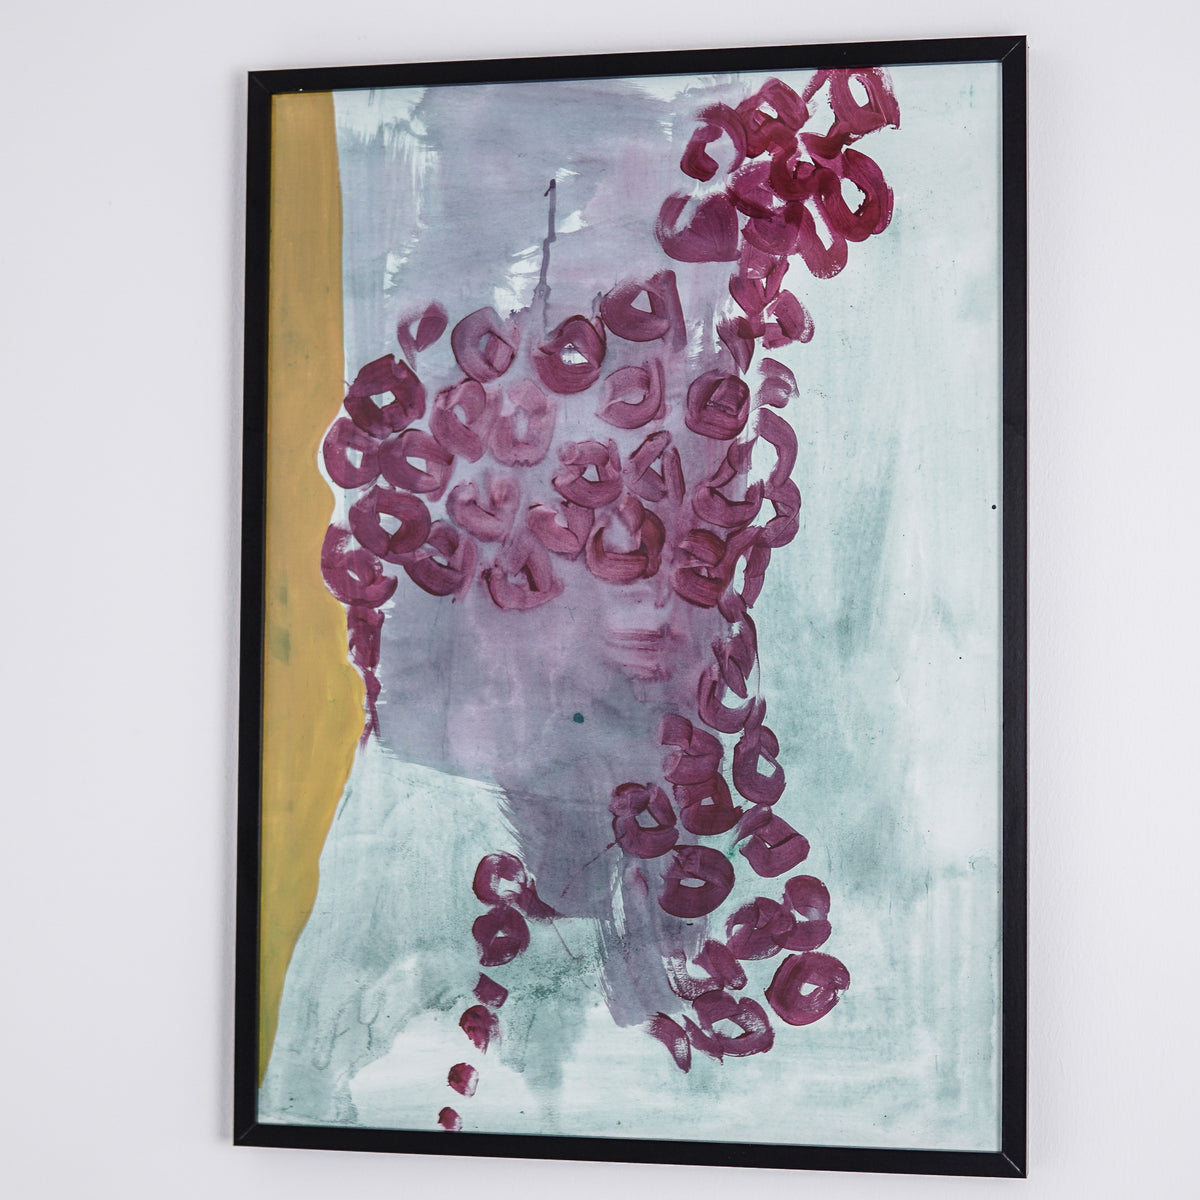 Madalena Pequito | 2019 | The piece at Penha | Acrilic and pigment on paper | 70 x 50 cm